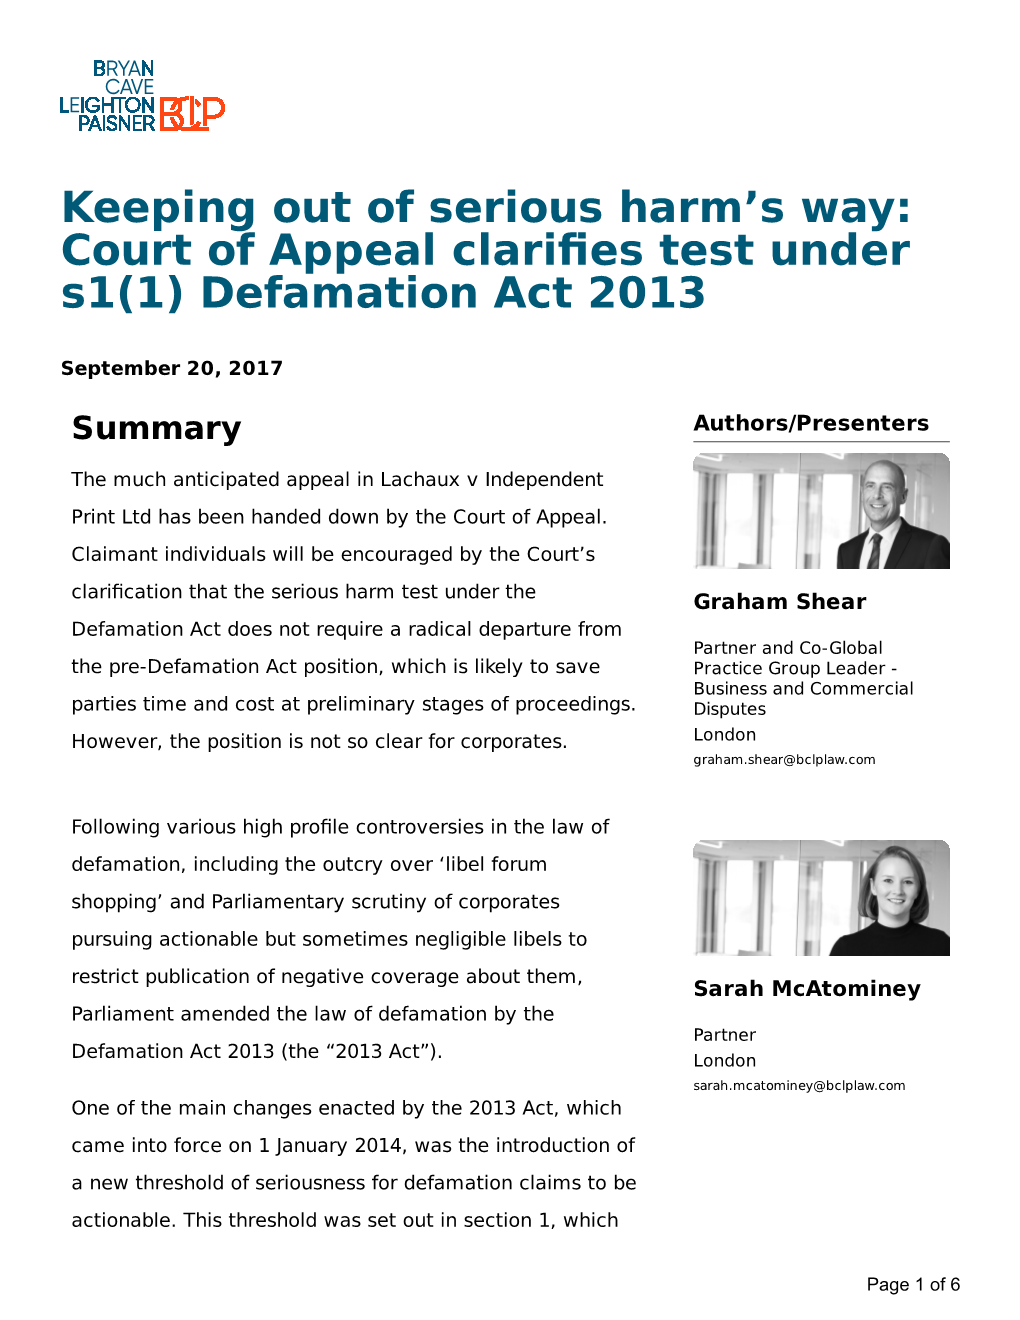 Defamation Act 2013